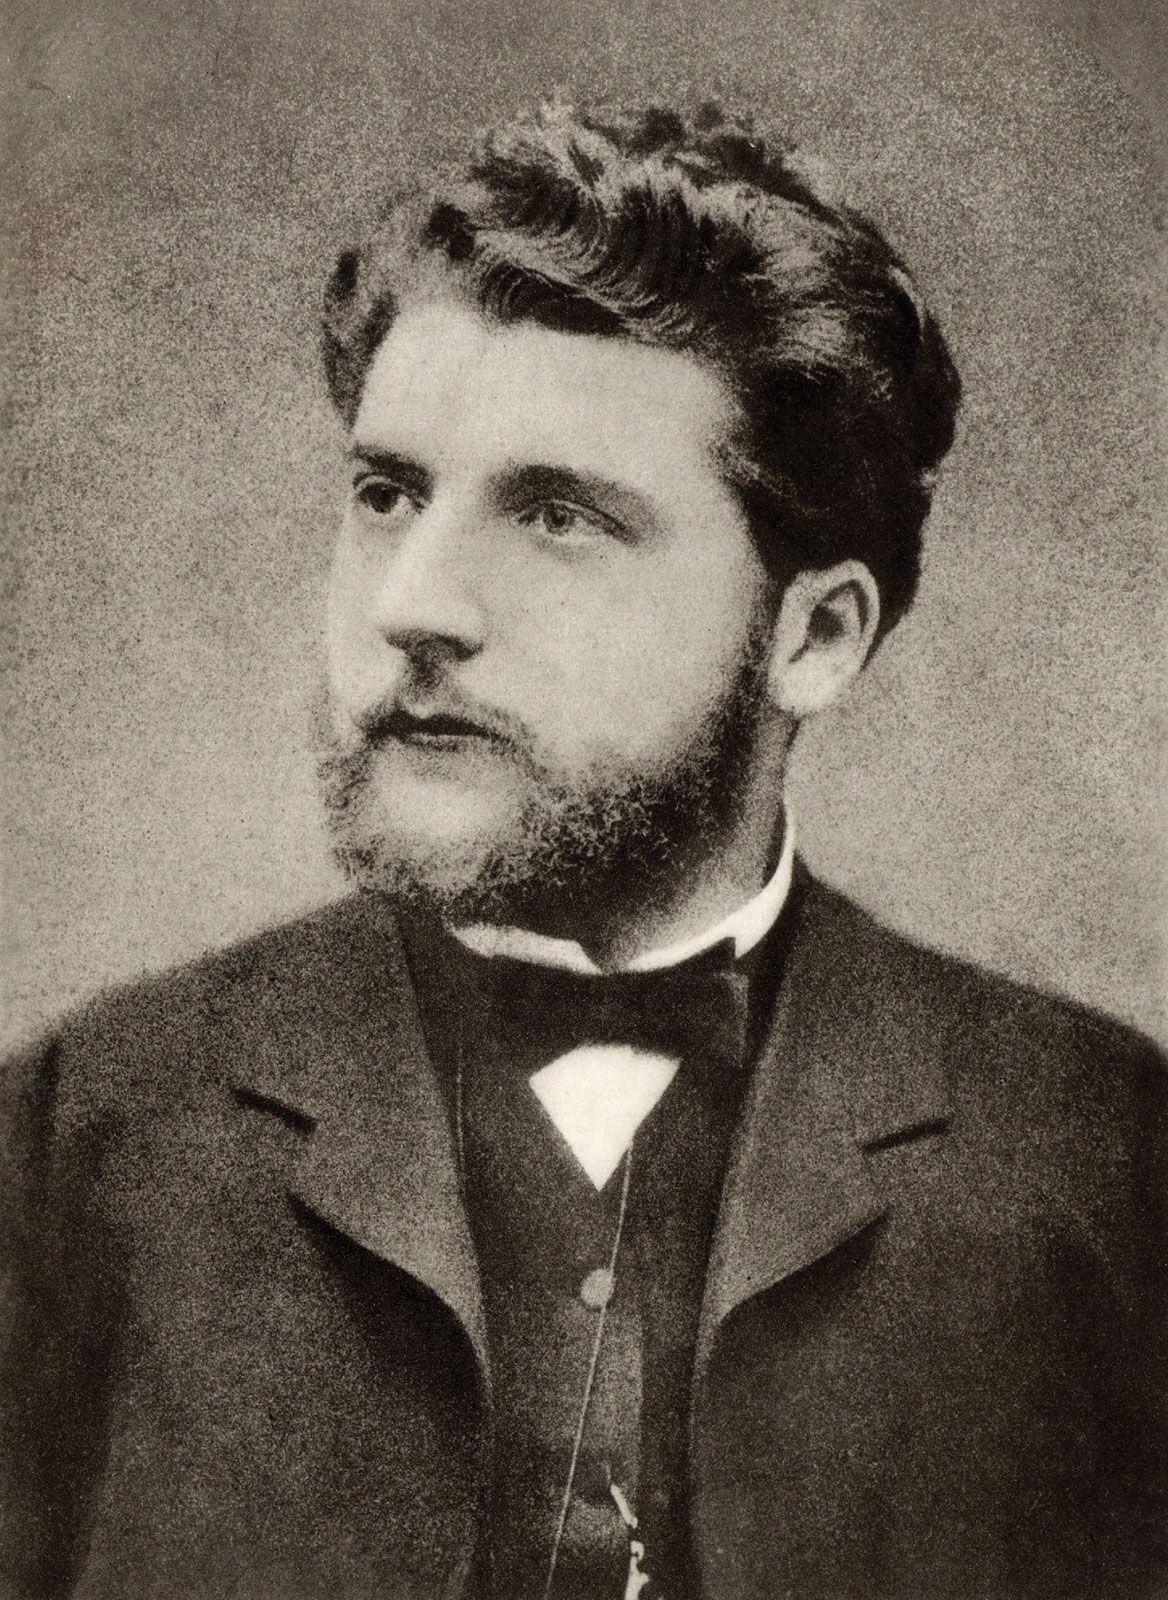  Georges Bizet, biografía